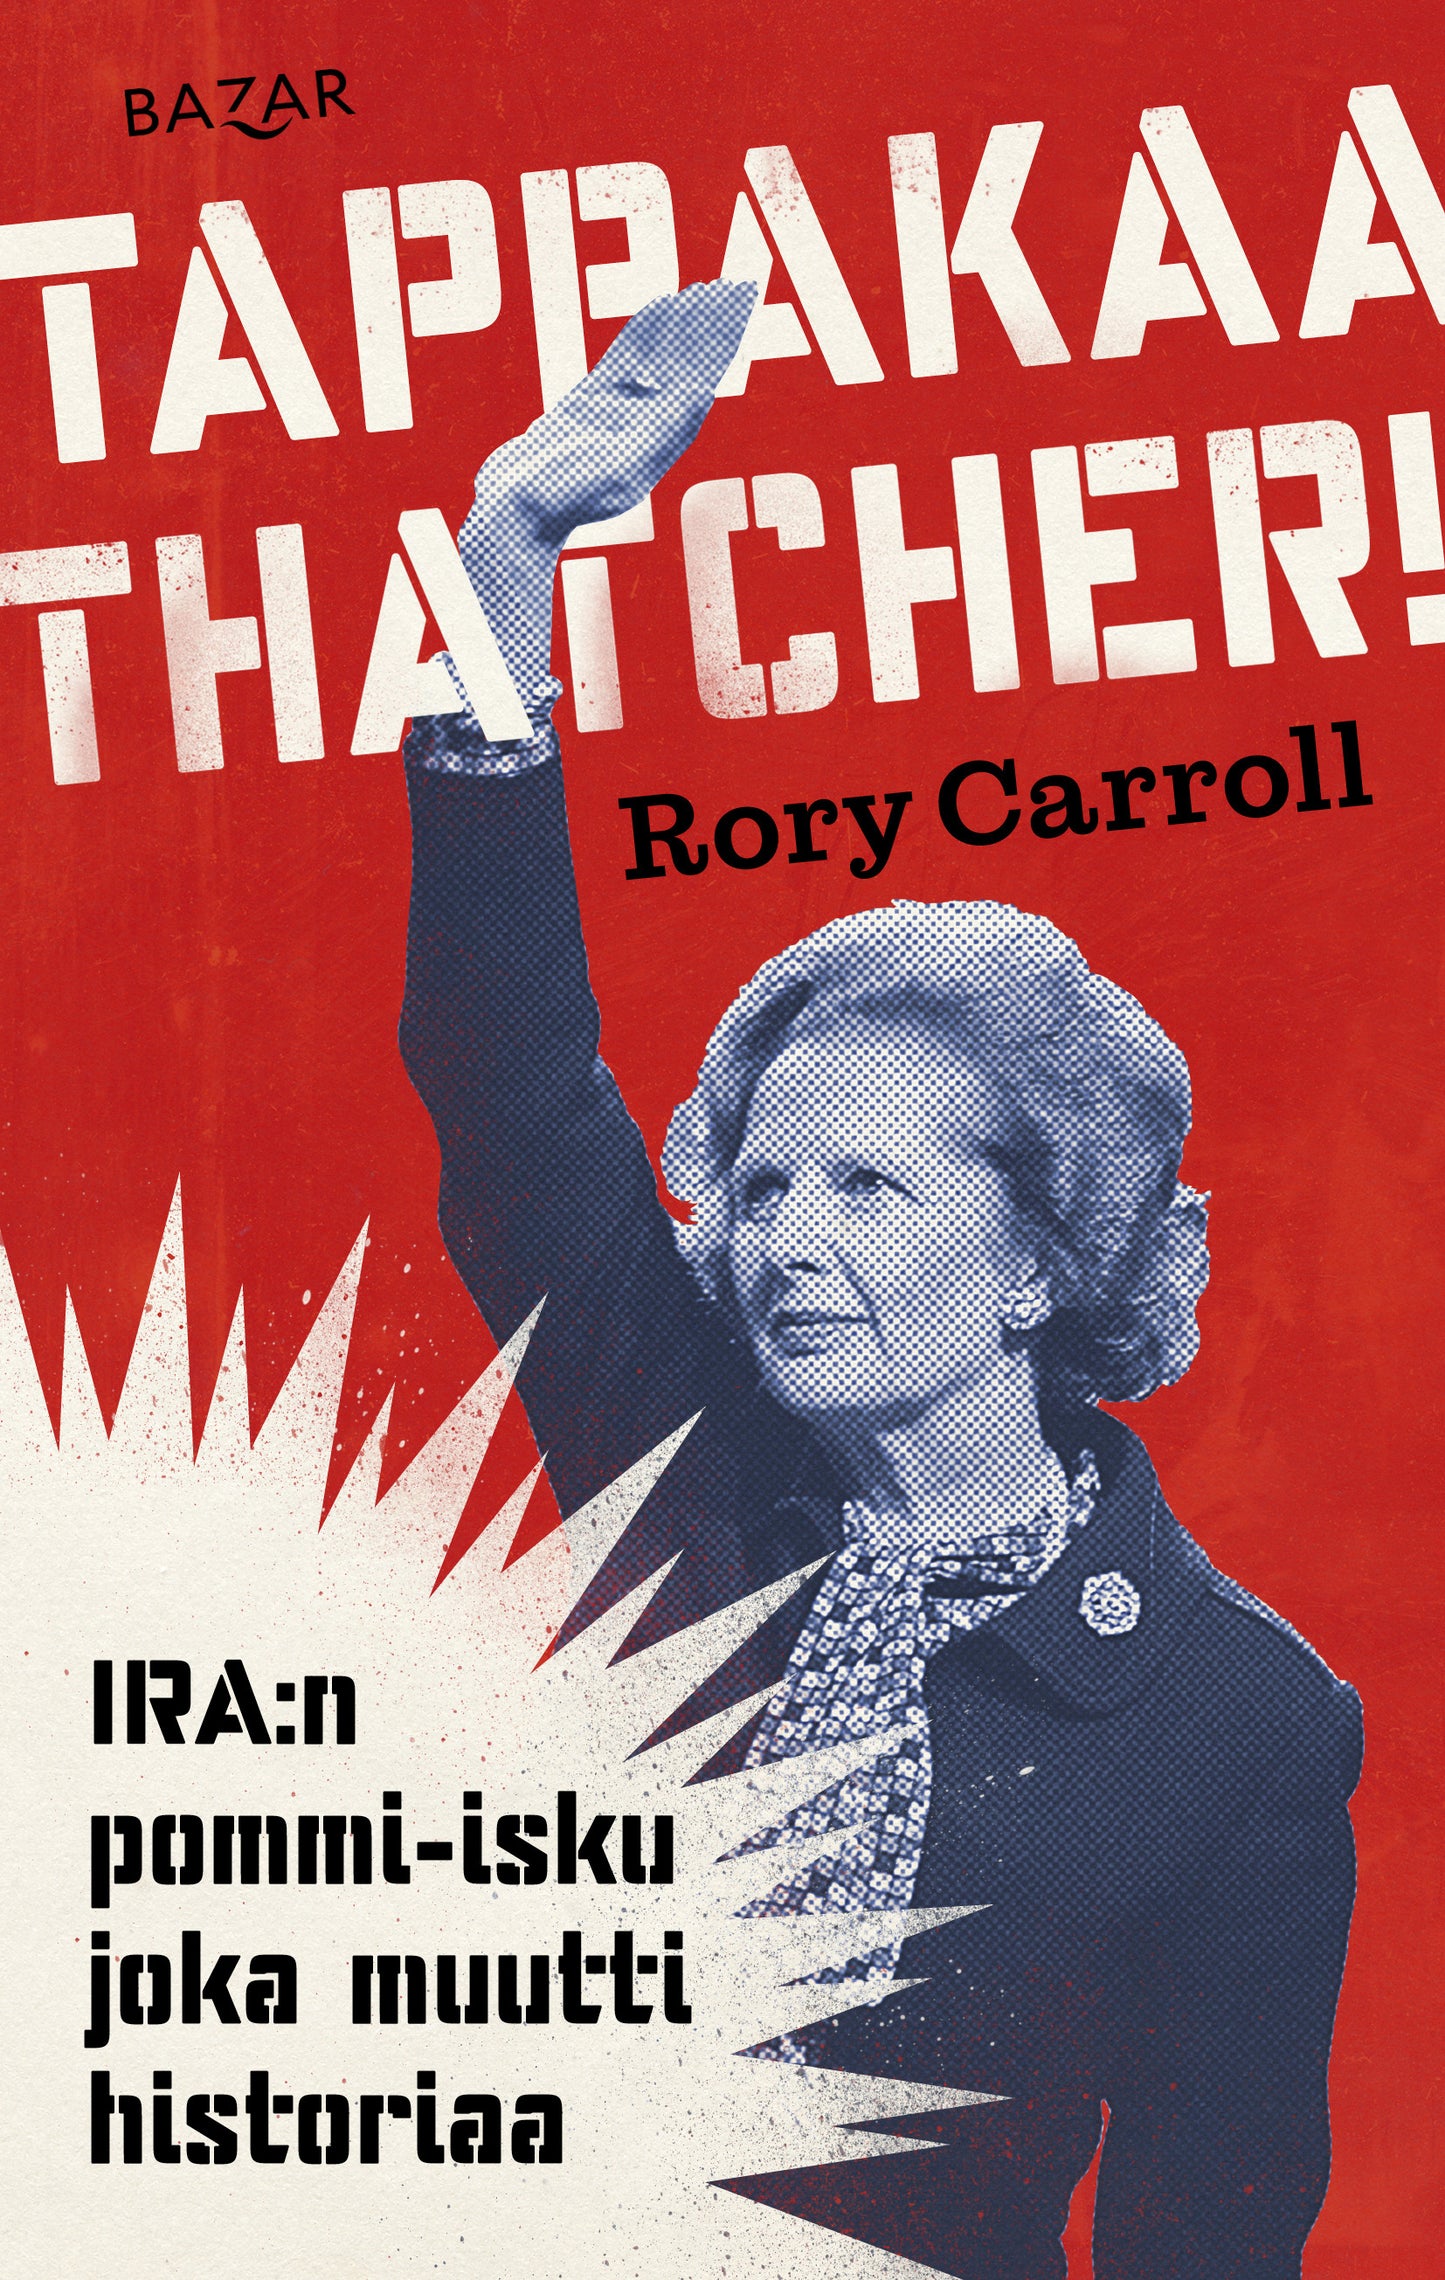 Tappakaa Thatcher!